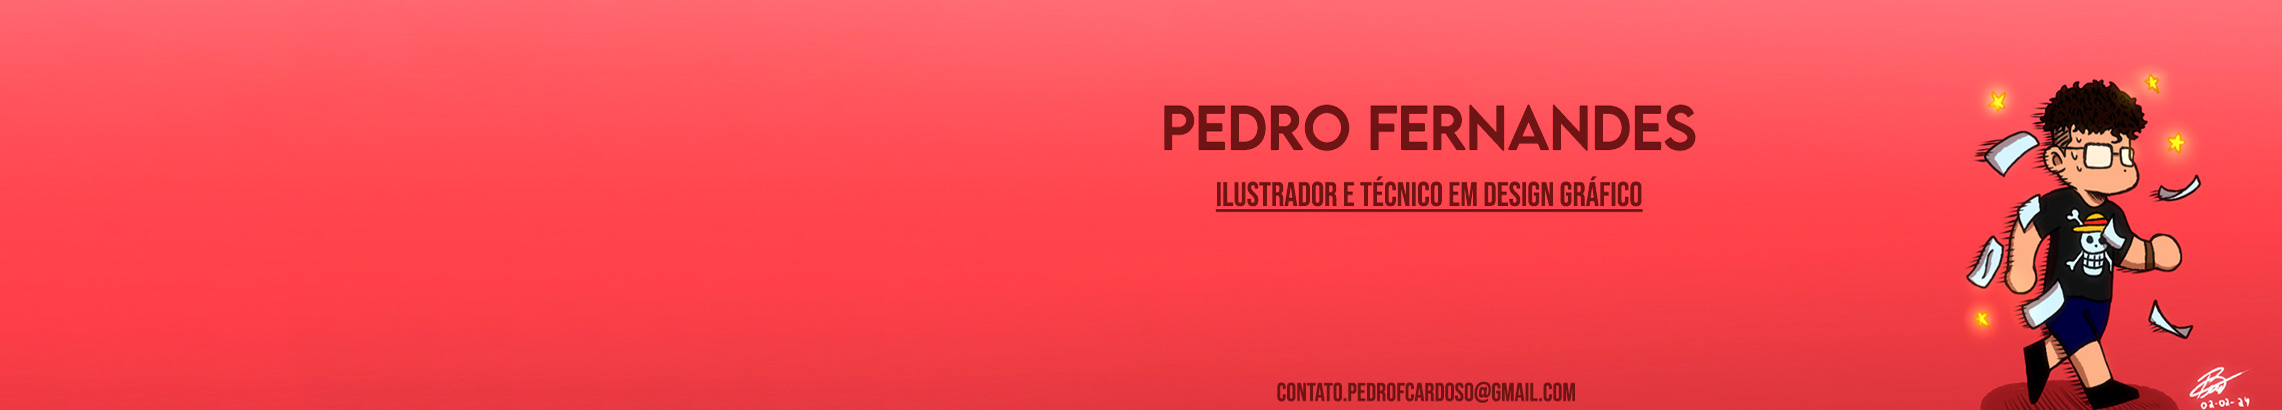 Pedro Fernandes's profile banner